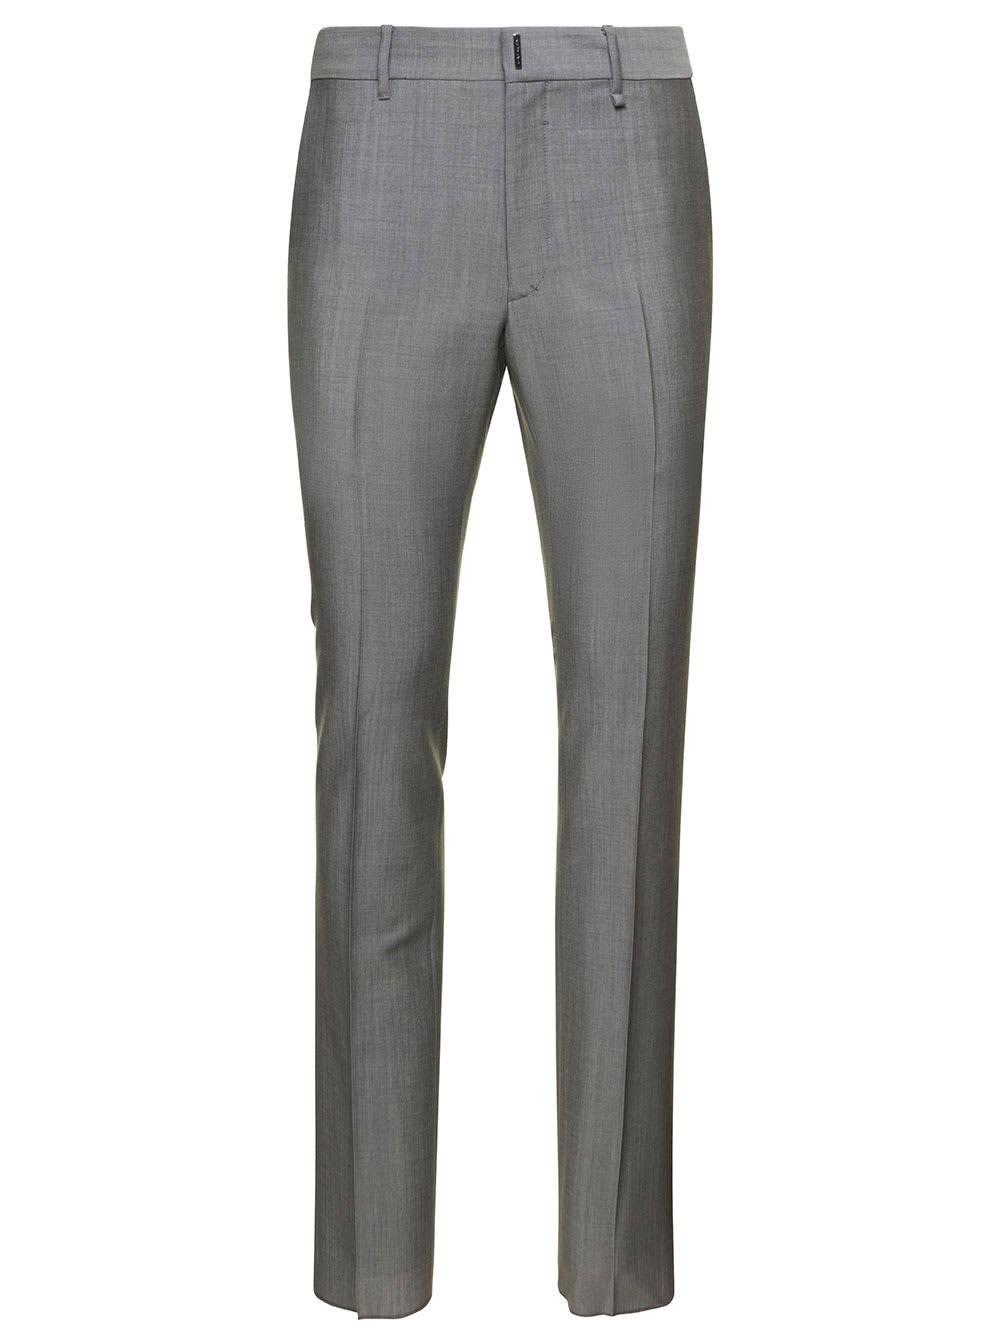 Givenchy Grey Slim Pants With Metallic Logo Detail In Wool Blend Man